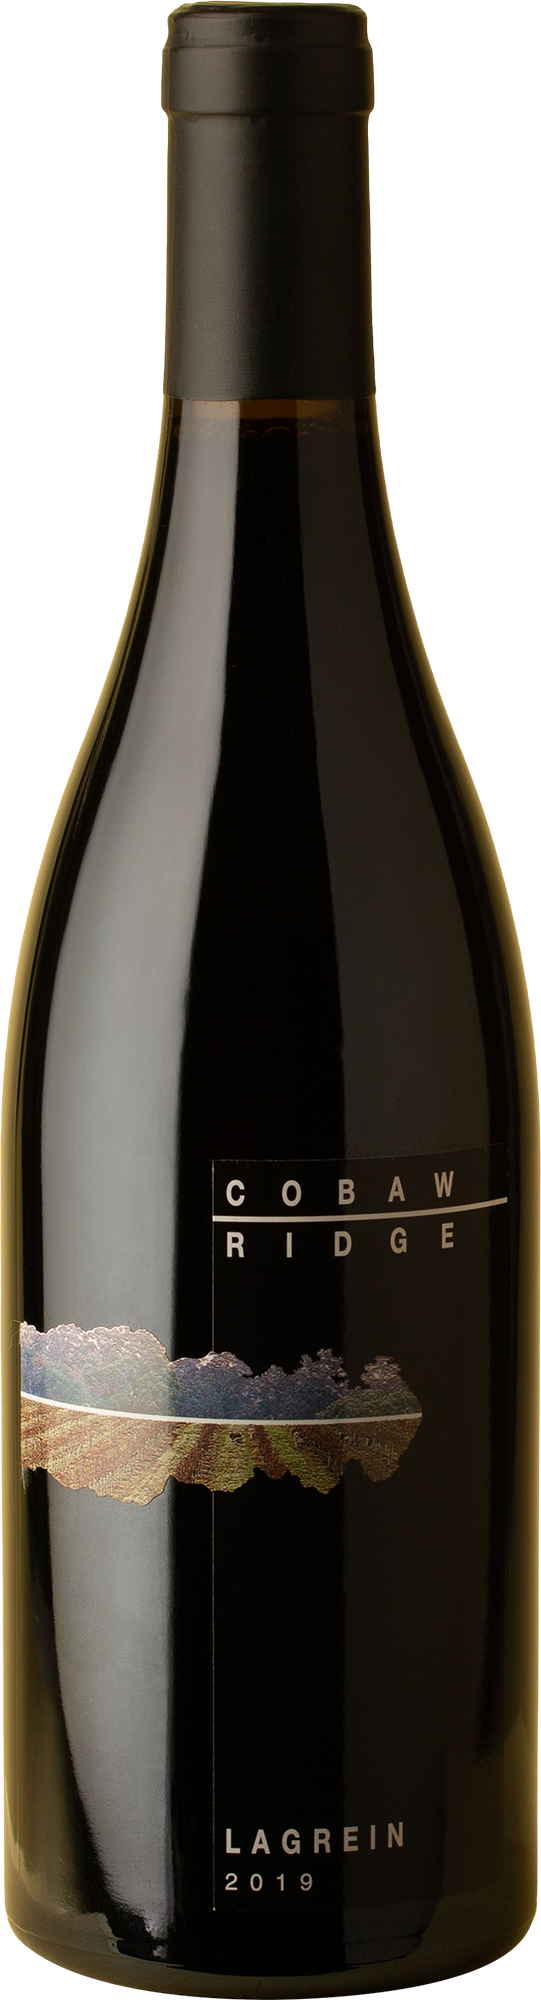 Cobaw Ridge - Lagrein 2019 Red Wine